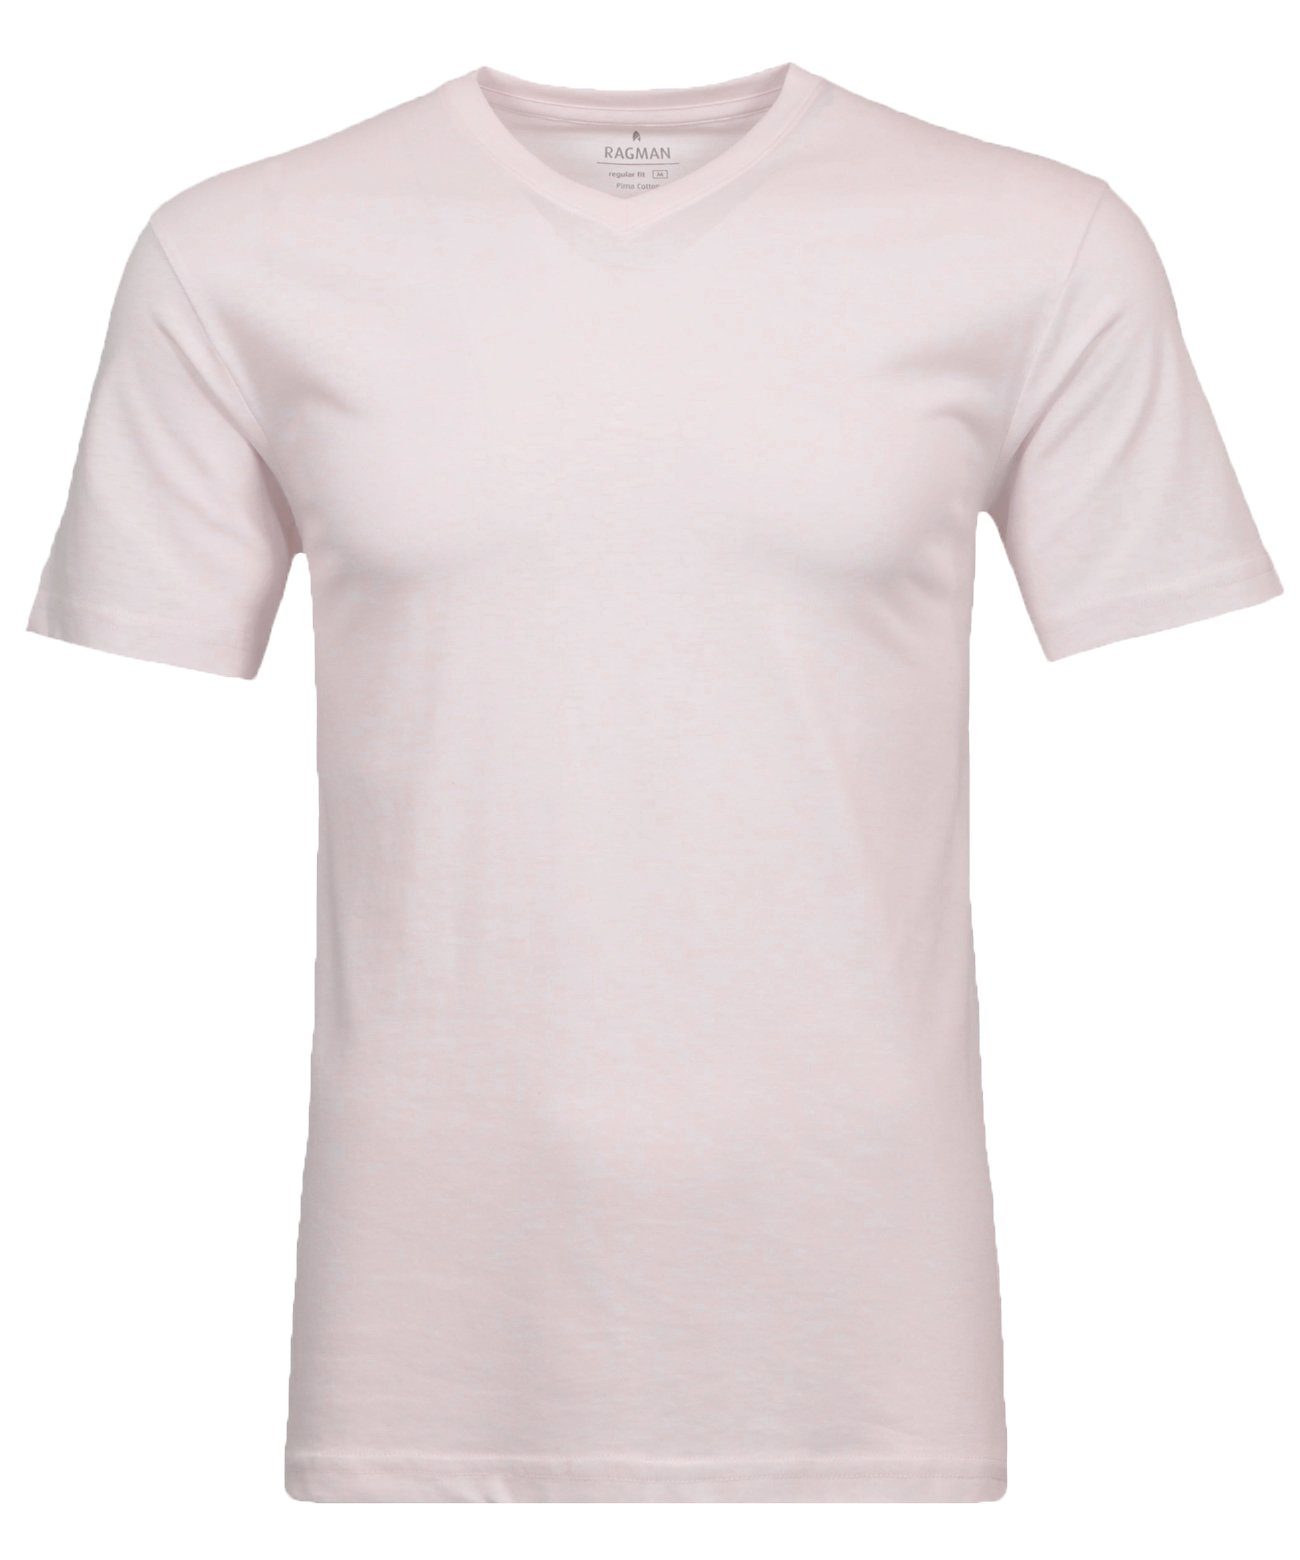 RAGMAN T-Shirt Rosa-609